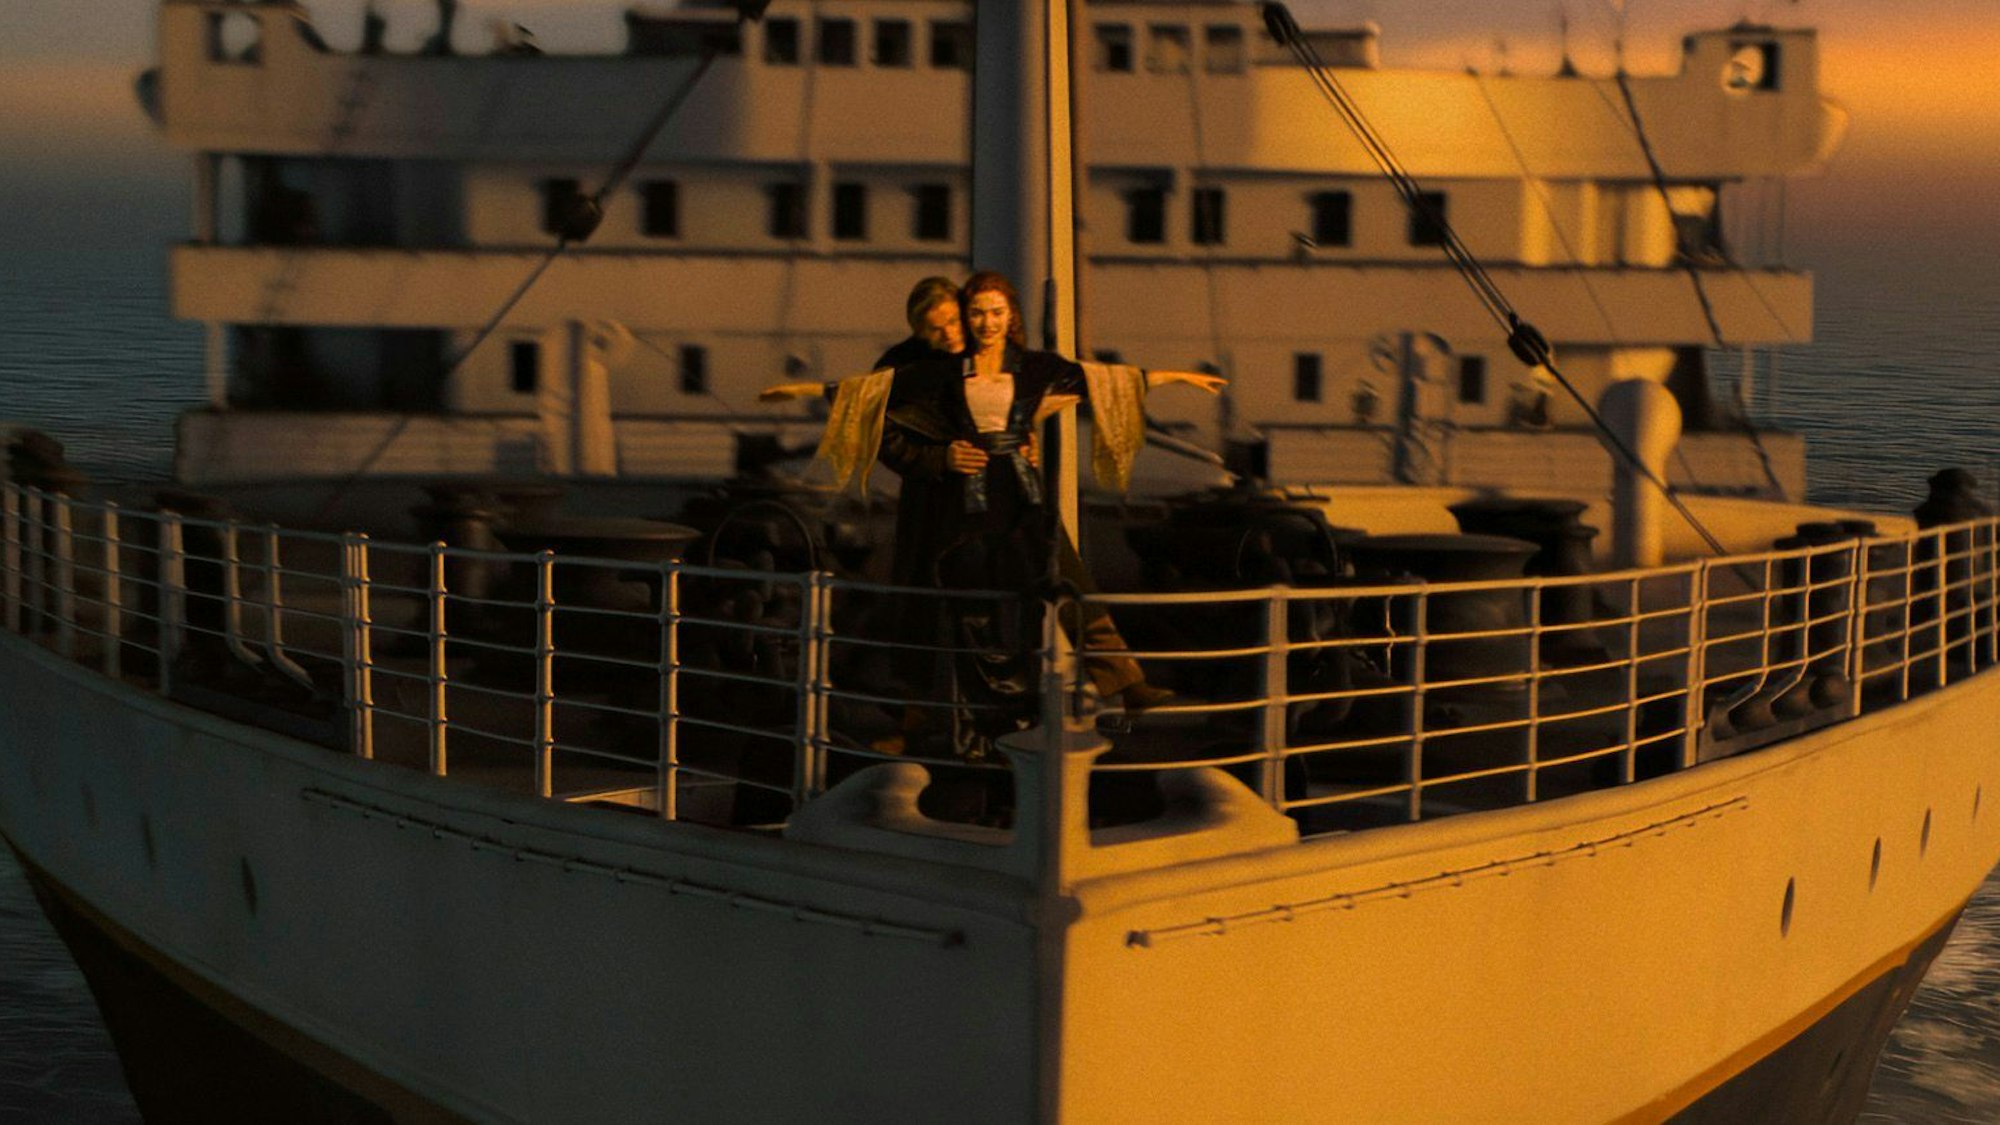 Leonardo DiCaprio als Jack und Kate Winslet als Rose in einer Szene aus „Titanic“.